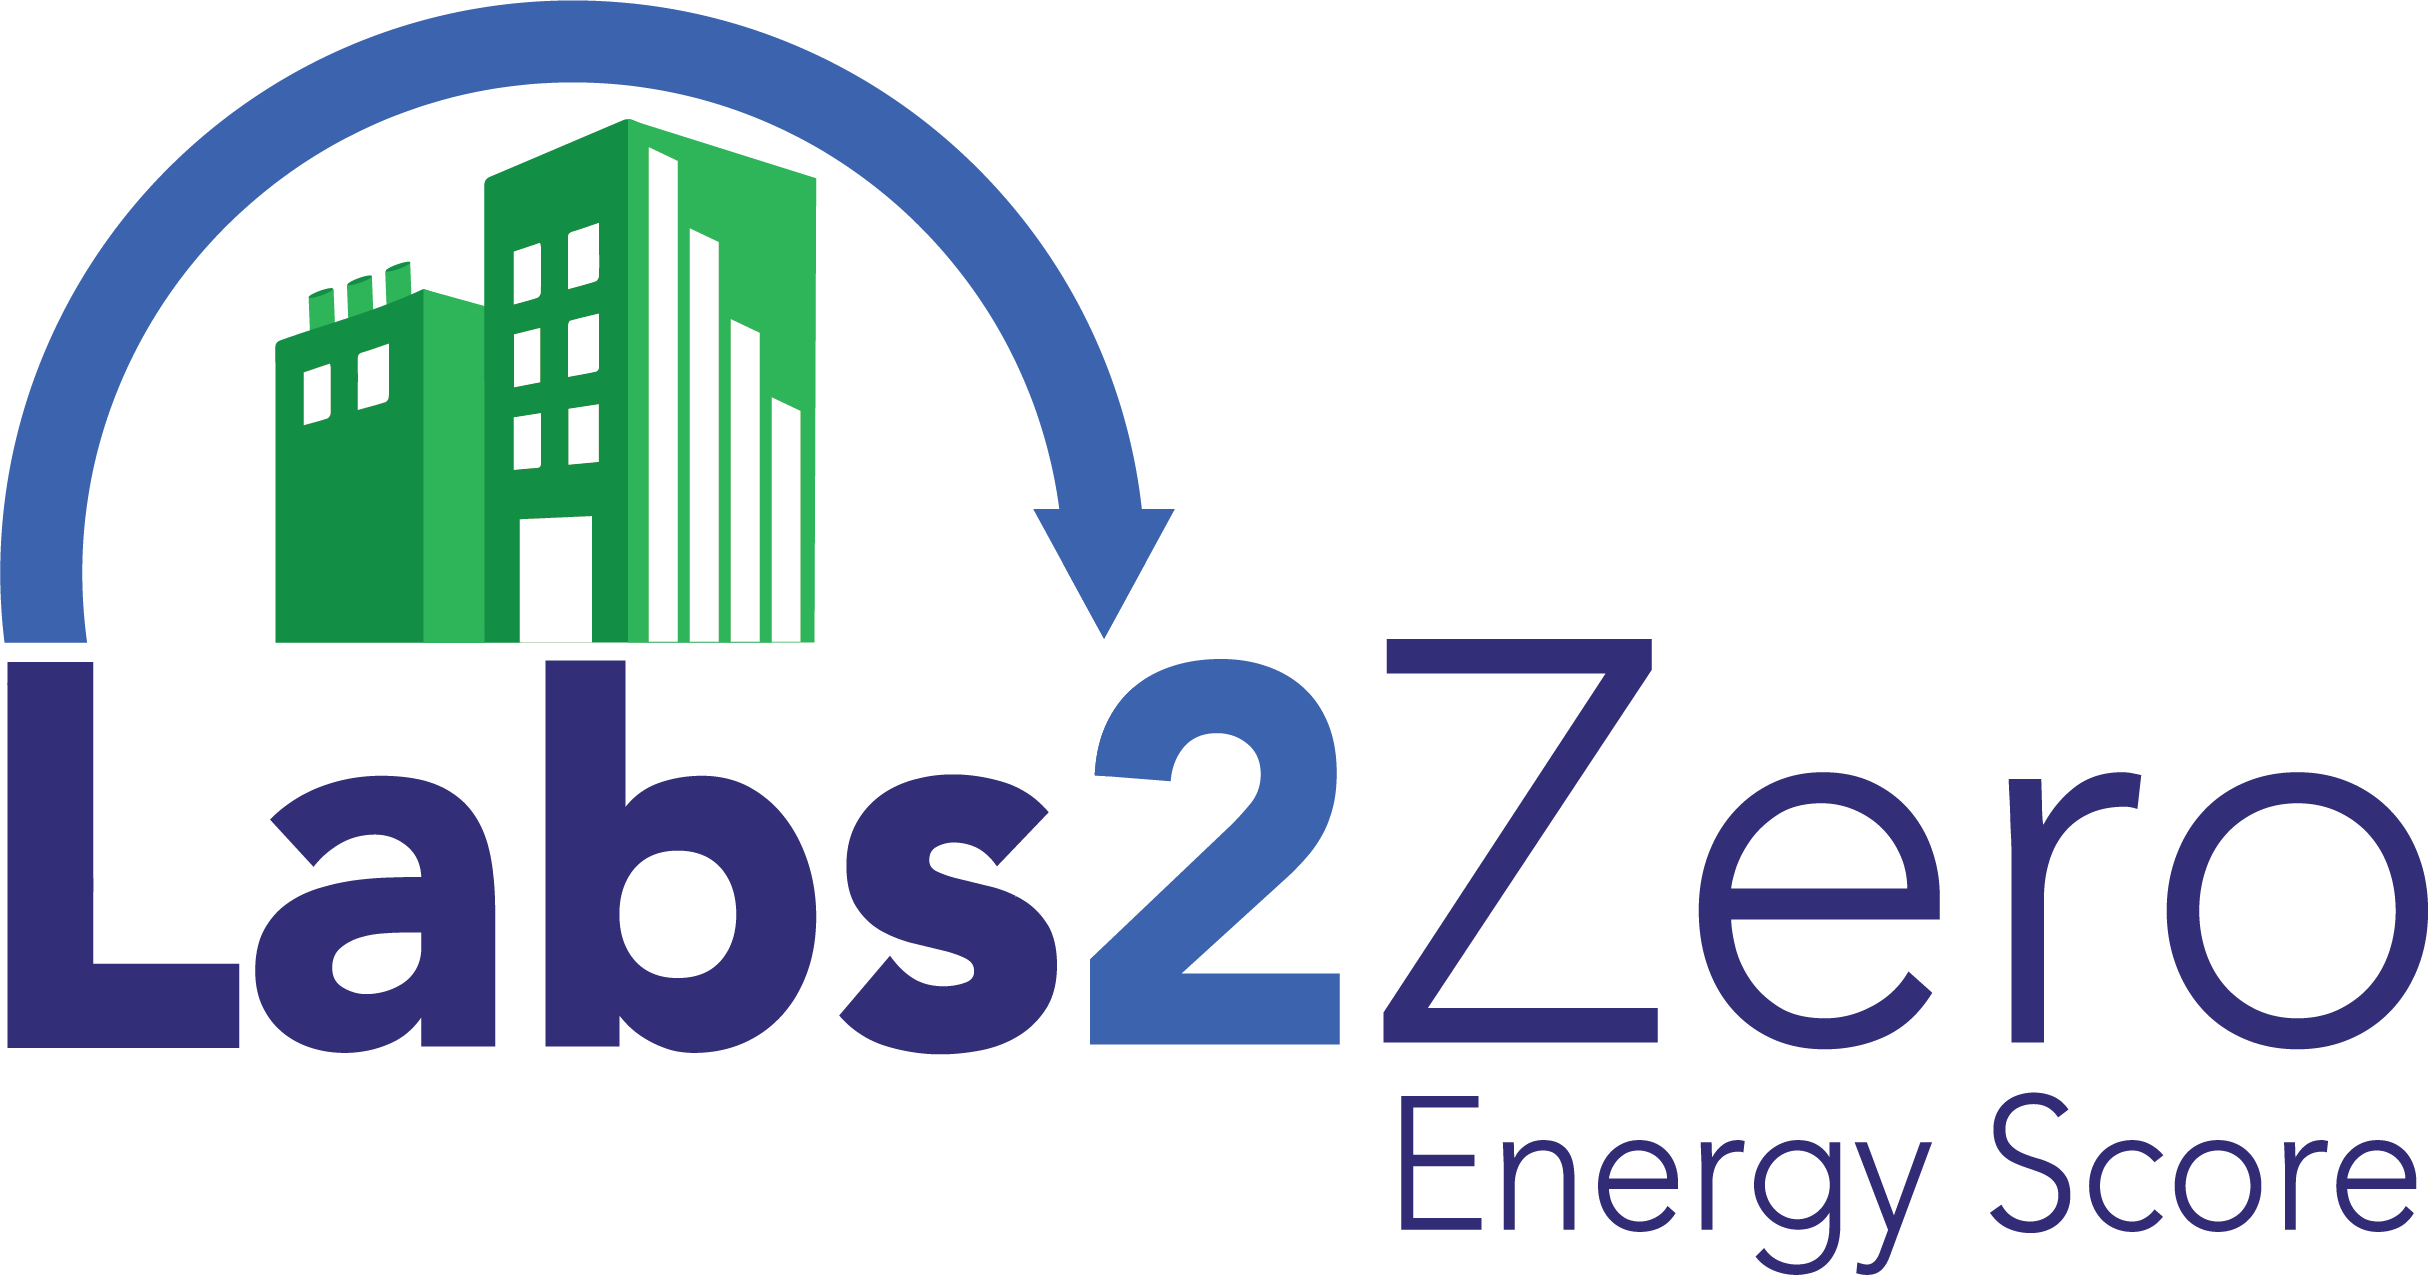 I2SL ES Logo